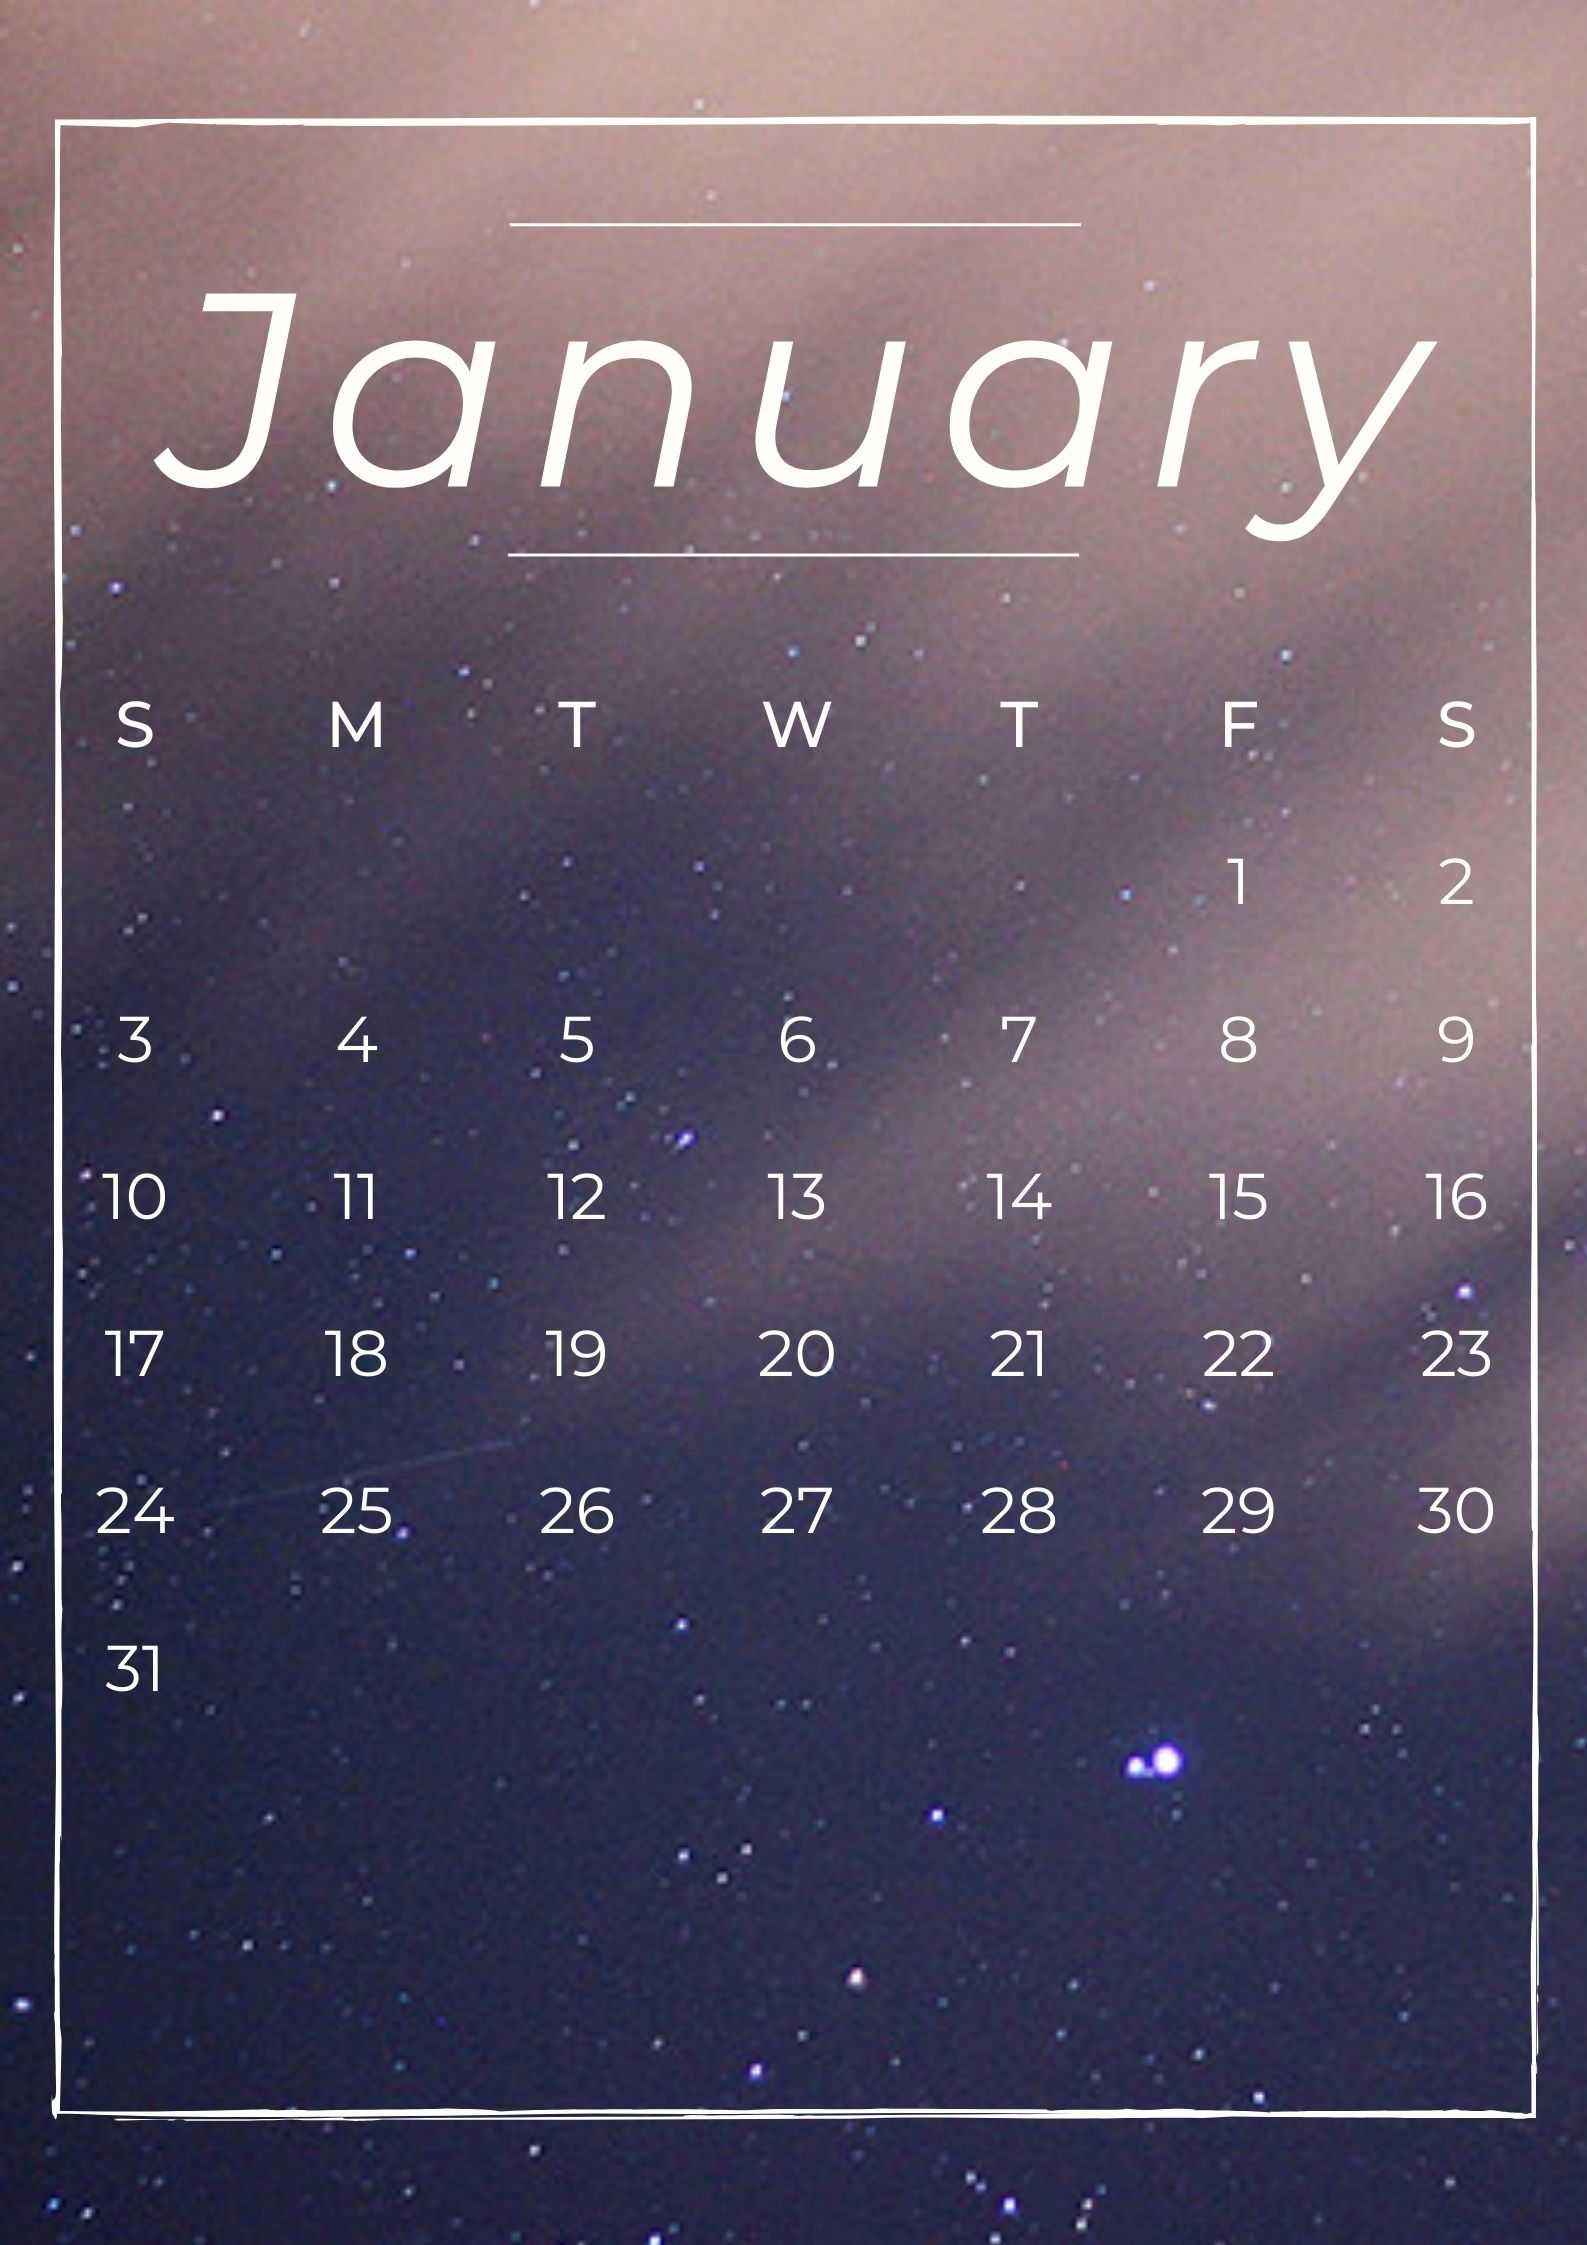 January 2021 Calendar Wallpaper - Kolpaper - Awesome Free